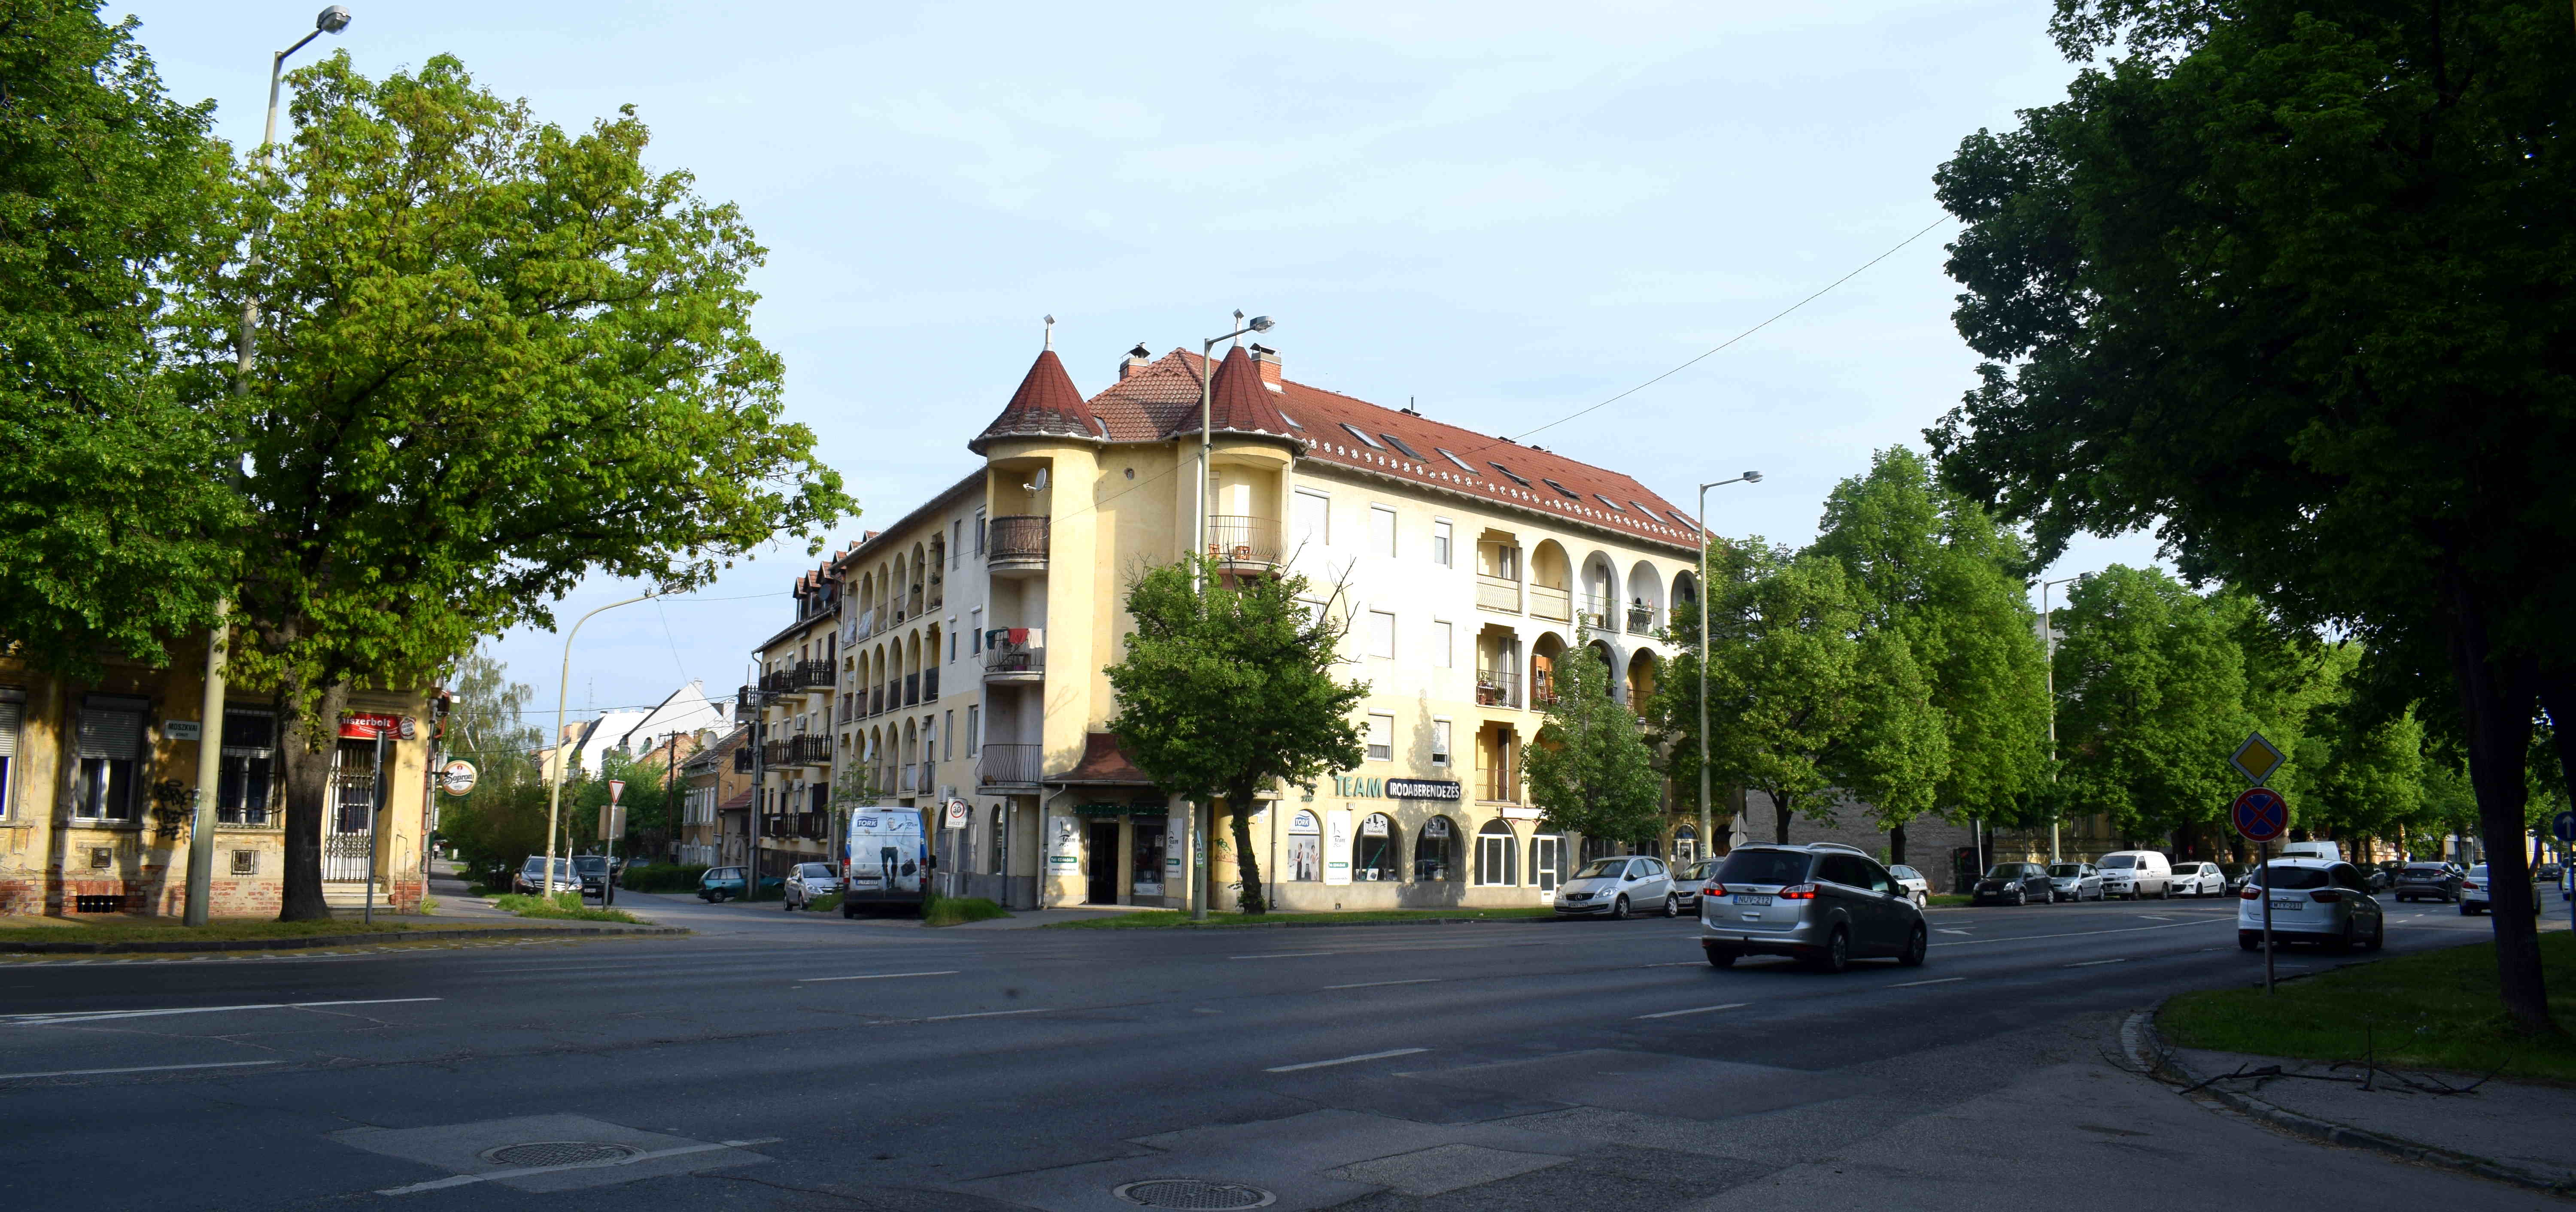 Szeged, Hungary Architecture